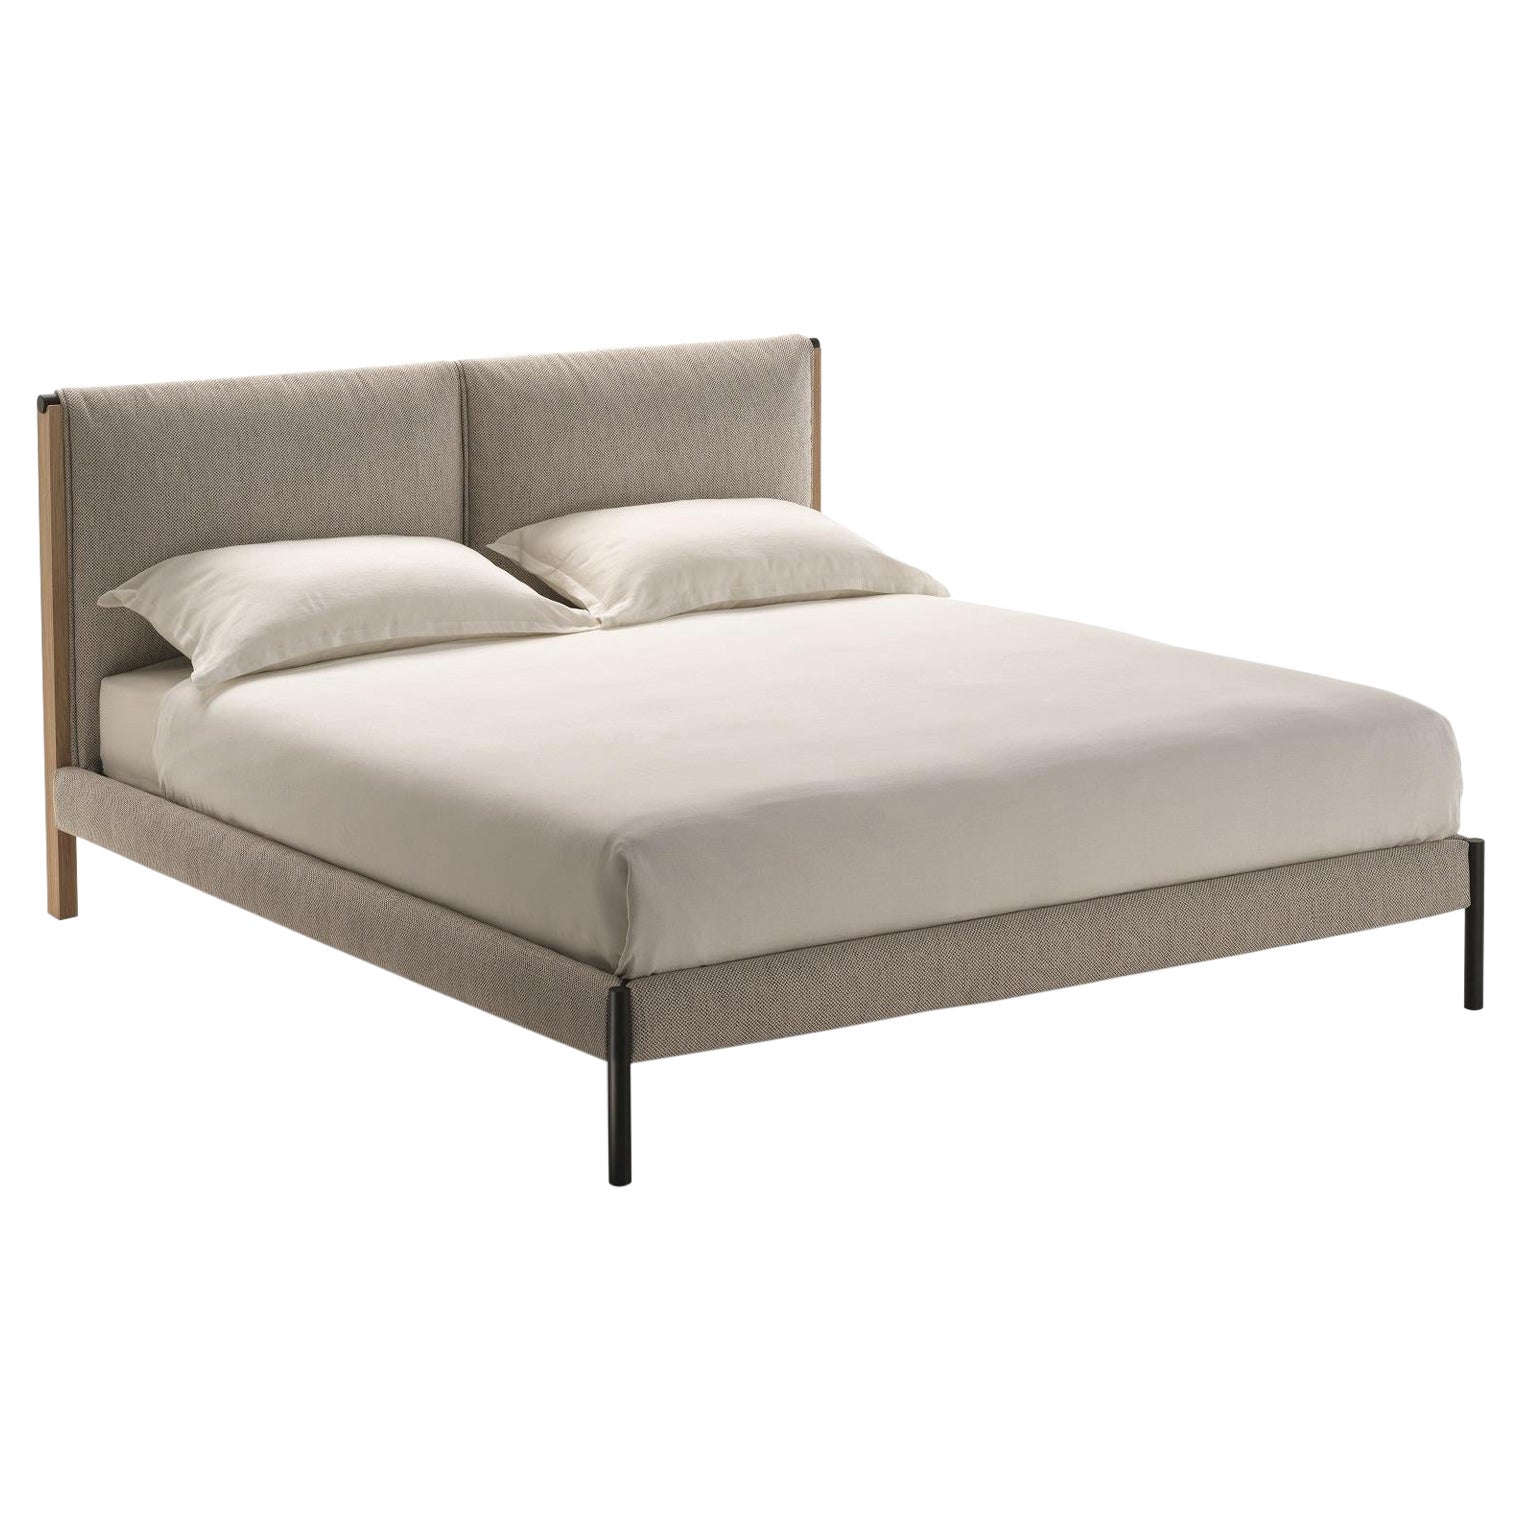 Zanotta Medium Ricordi Bed with Single Springing in Toce Upholstery